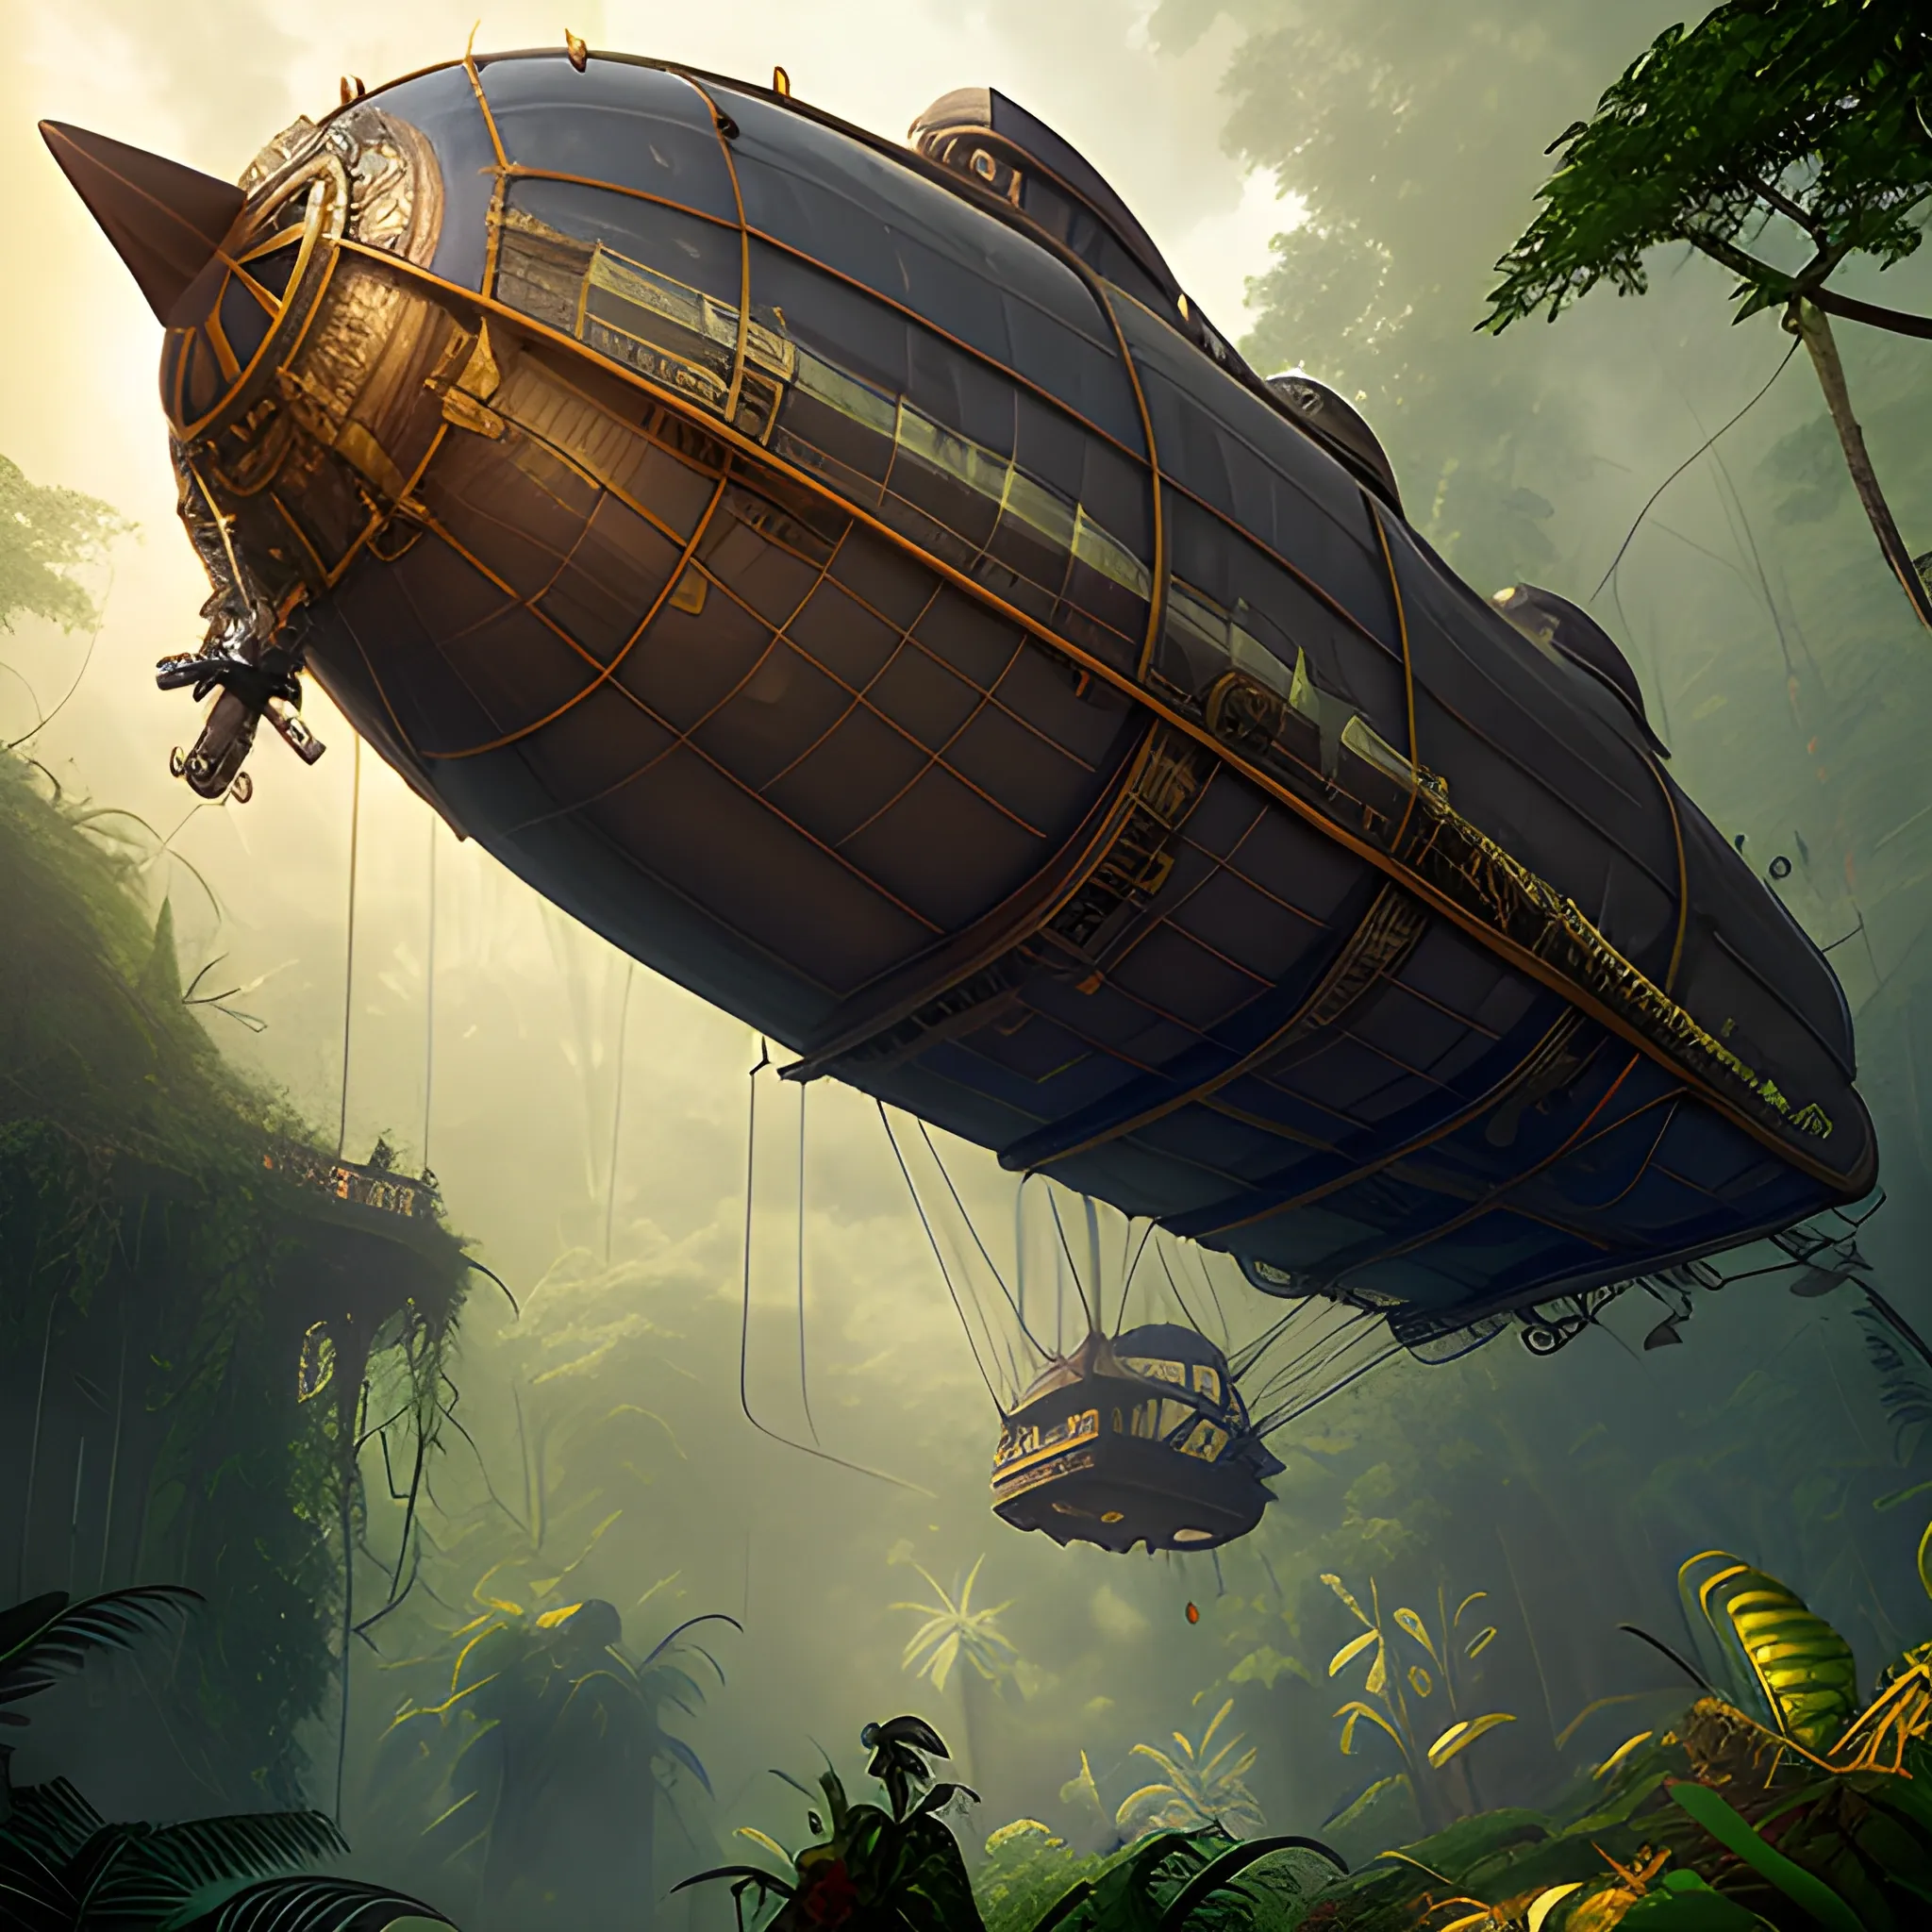 masterpiece, steampunk airship crashed in rainforest, film quality, unreal engine, matte, award-winning, beautiful studio Darklight
